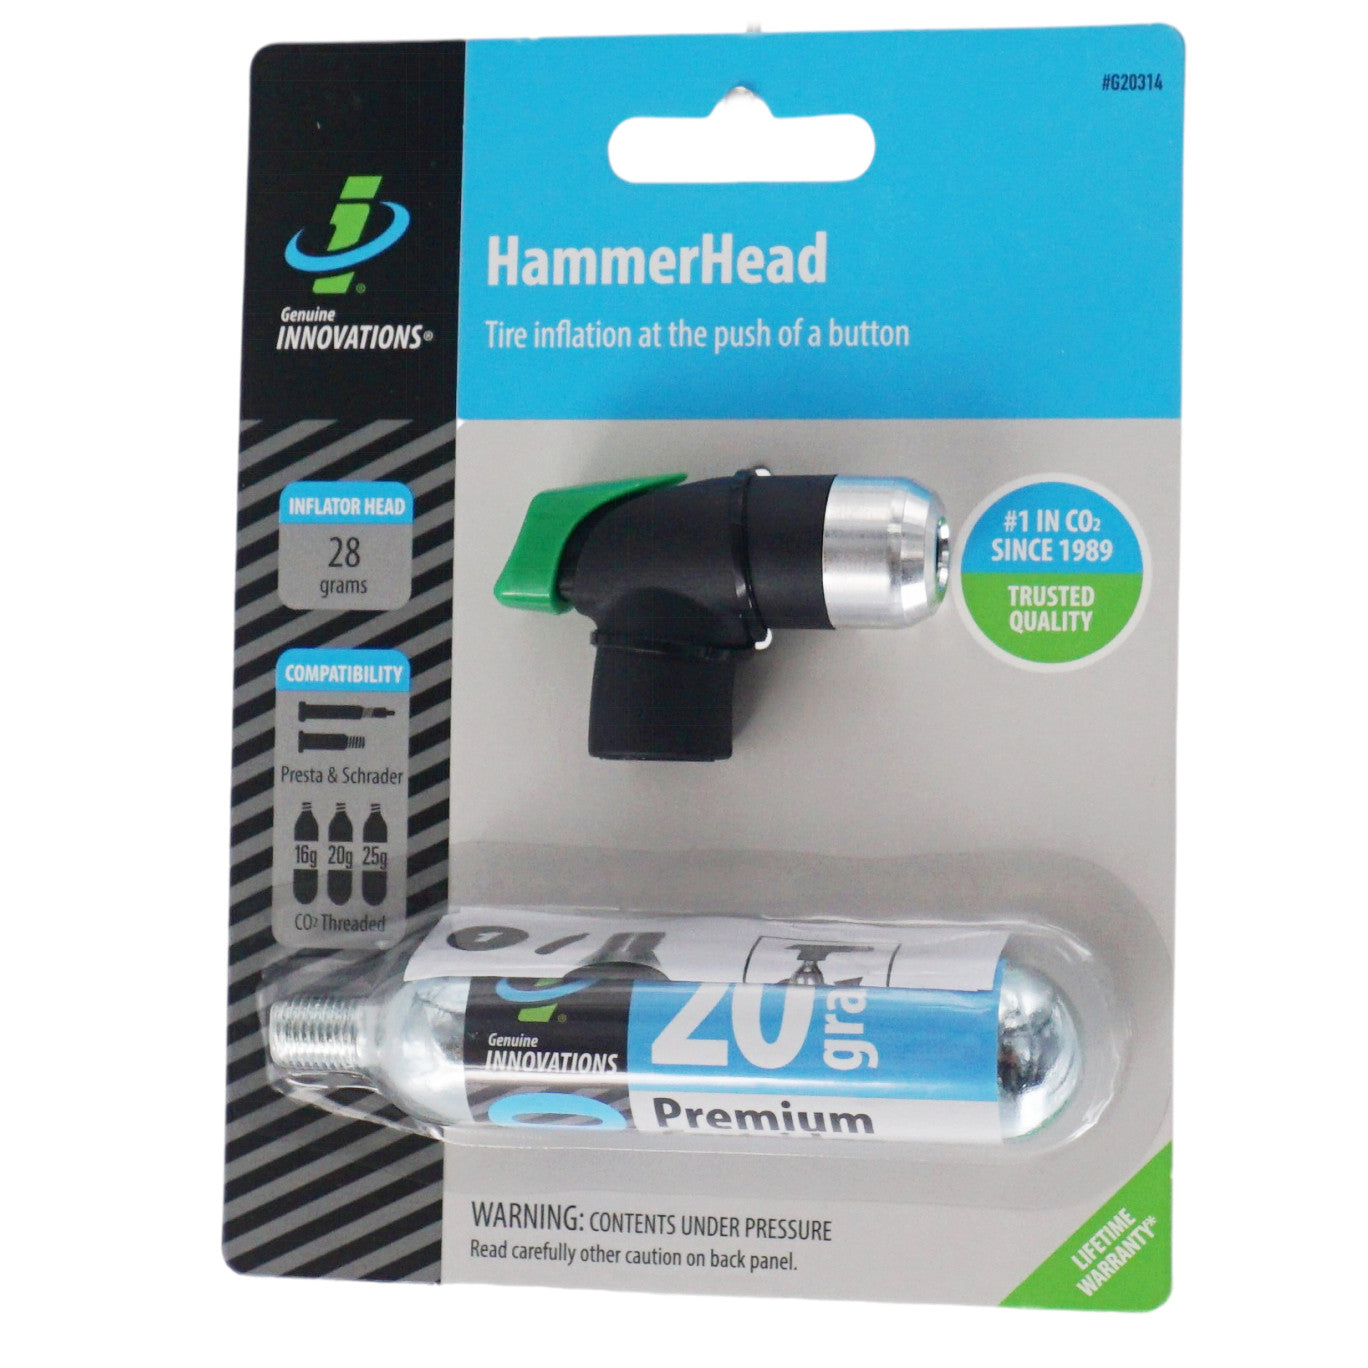 Genuine Innovations G20314 HammerHead Co2 Inflator w-1 20g Cartridge - The Bikesmiths